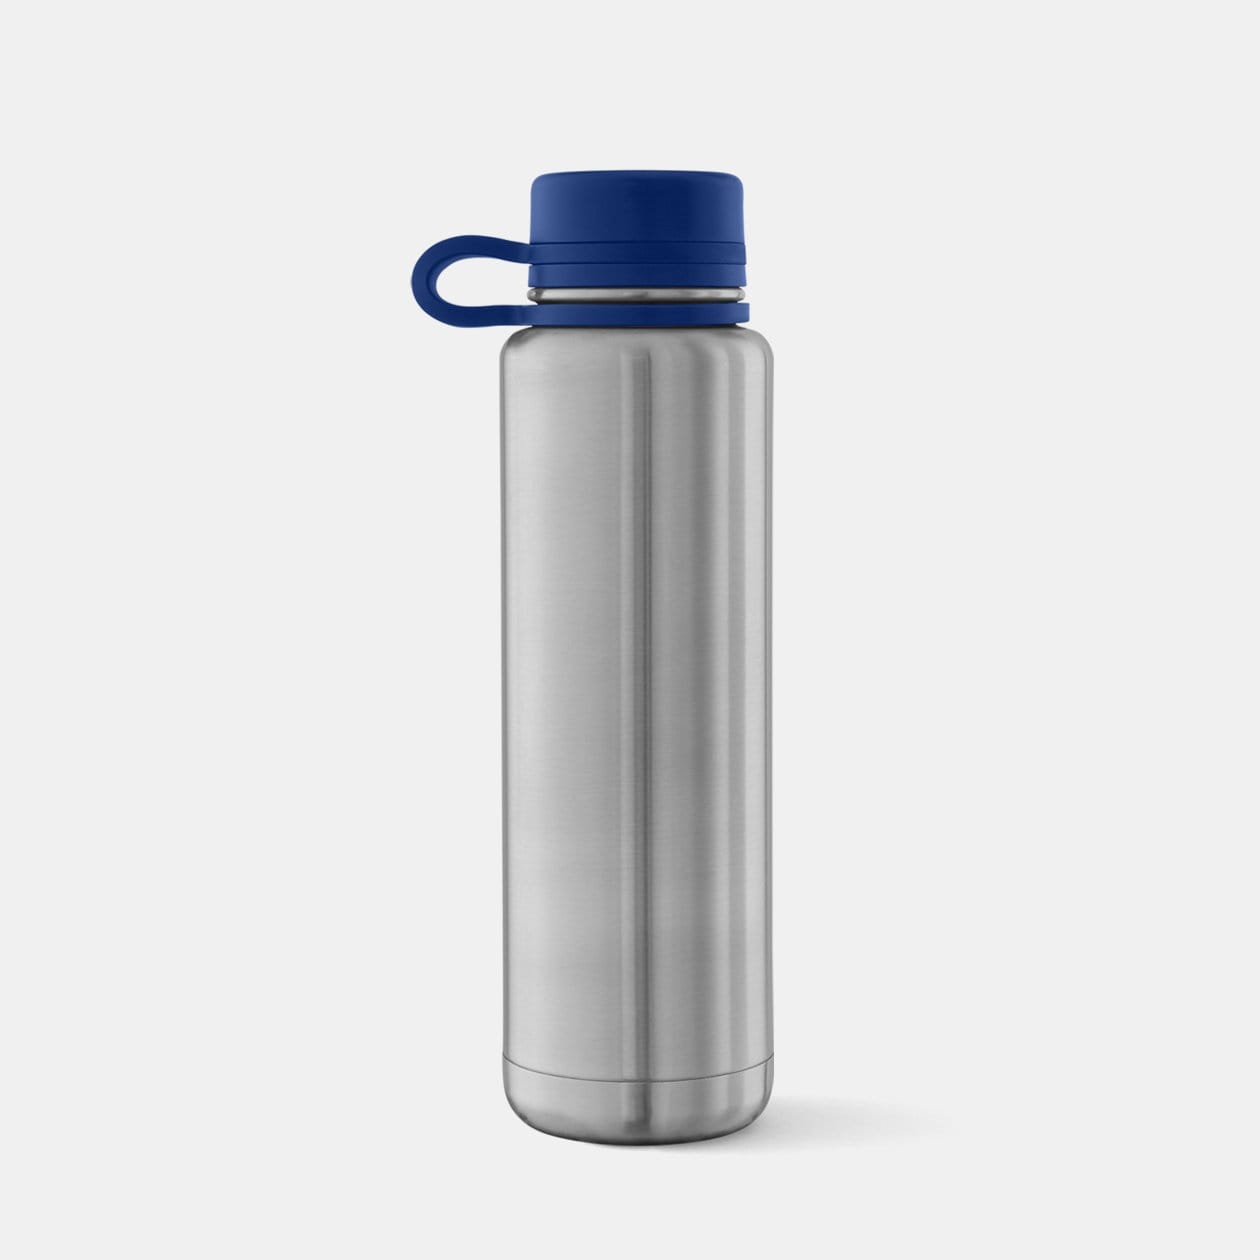 Stainless Steel Water Bottle - Dark Blue